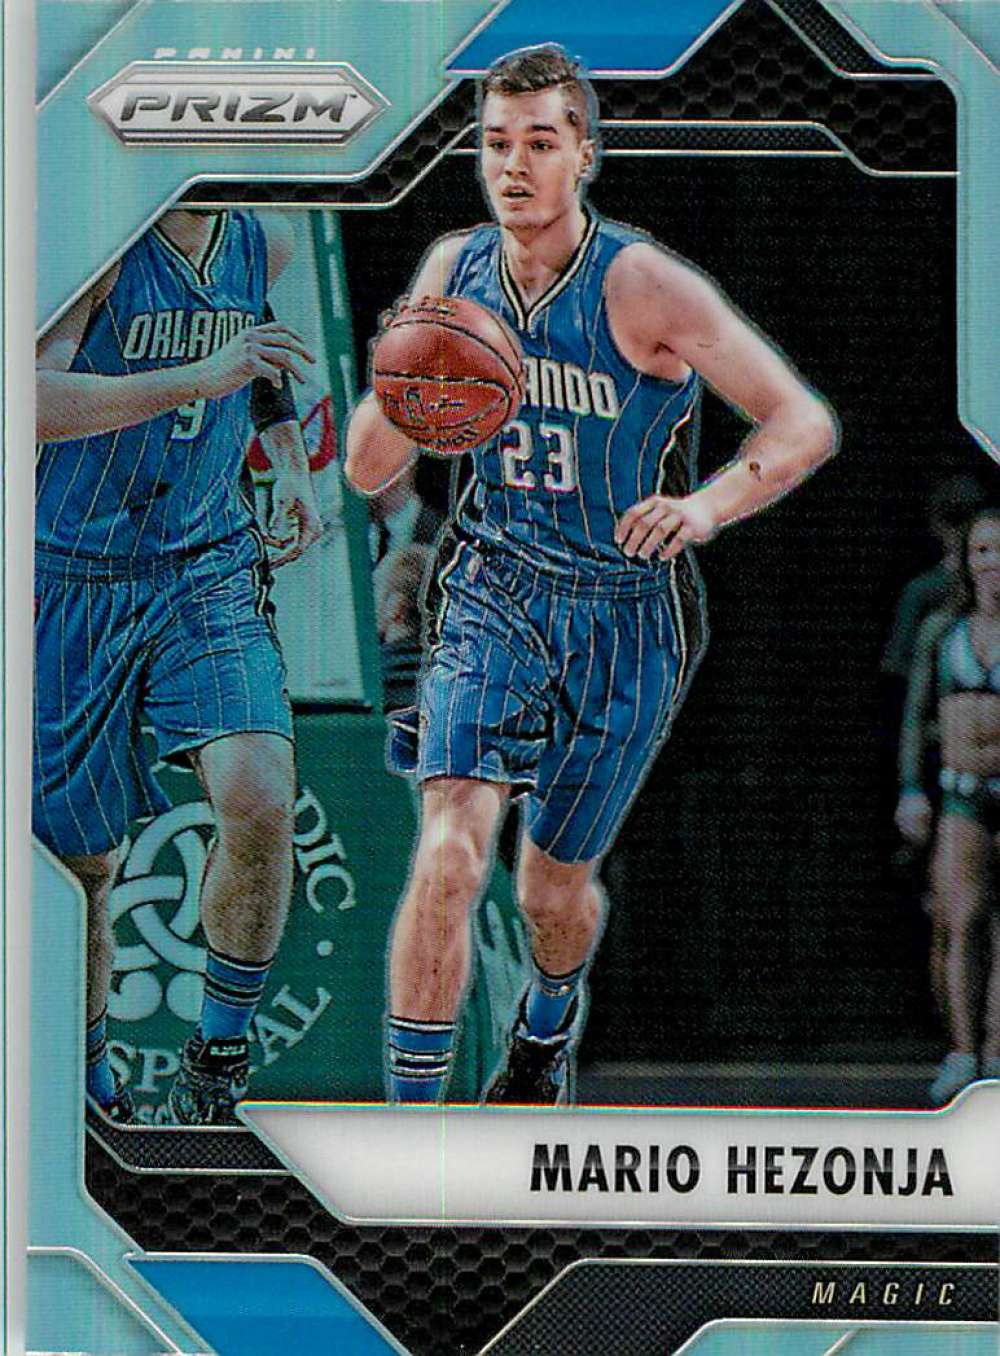 2016-17 Panini Prizm Silver Refractor #147 Mario Hezonja Orlando Magic Official NBA Trading Card